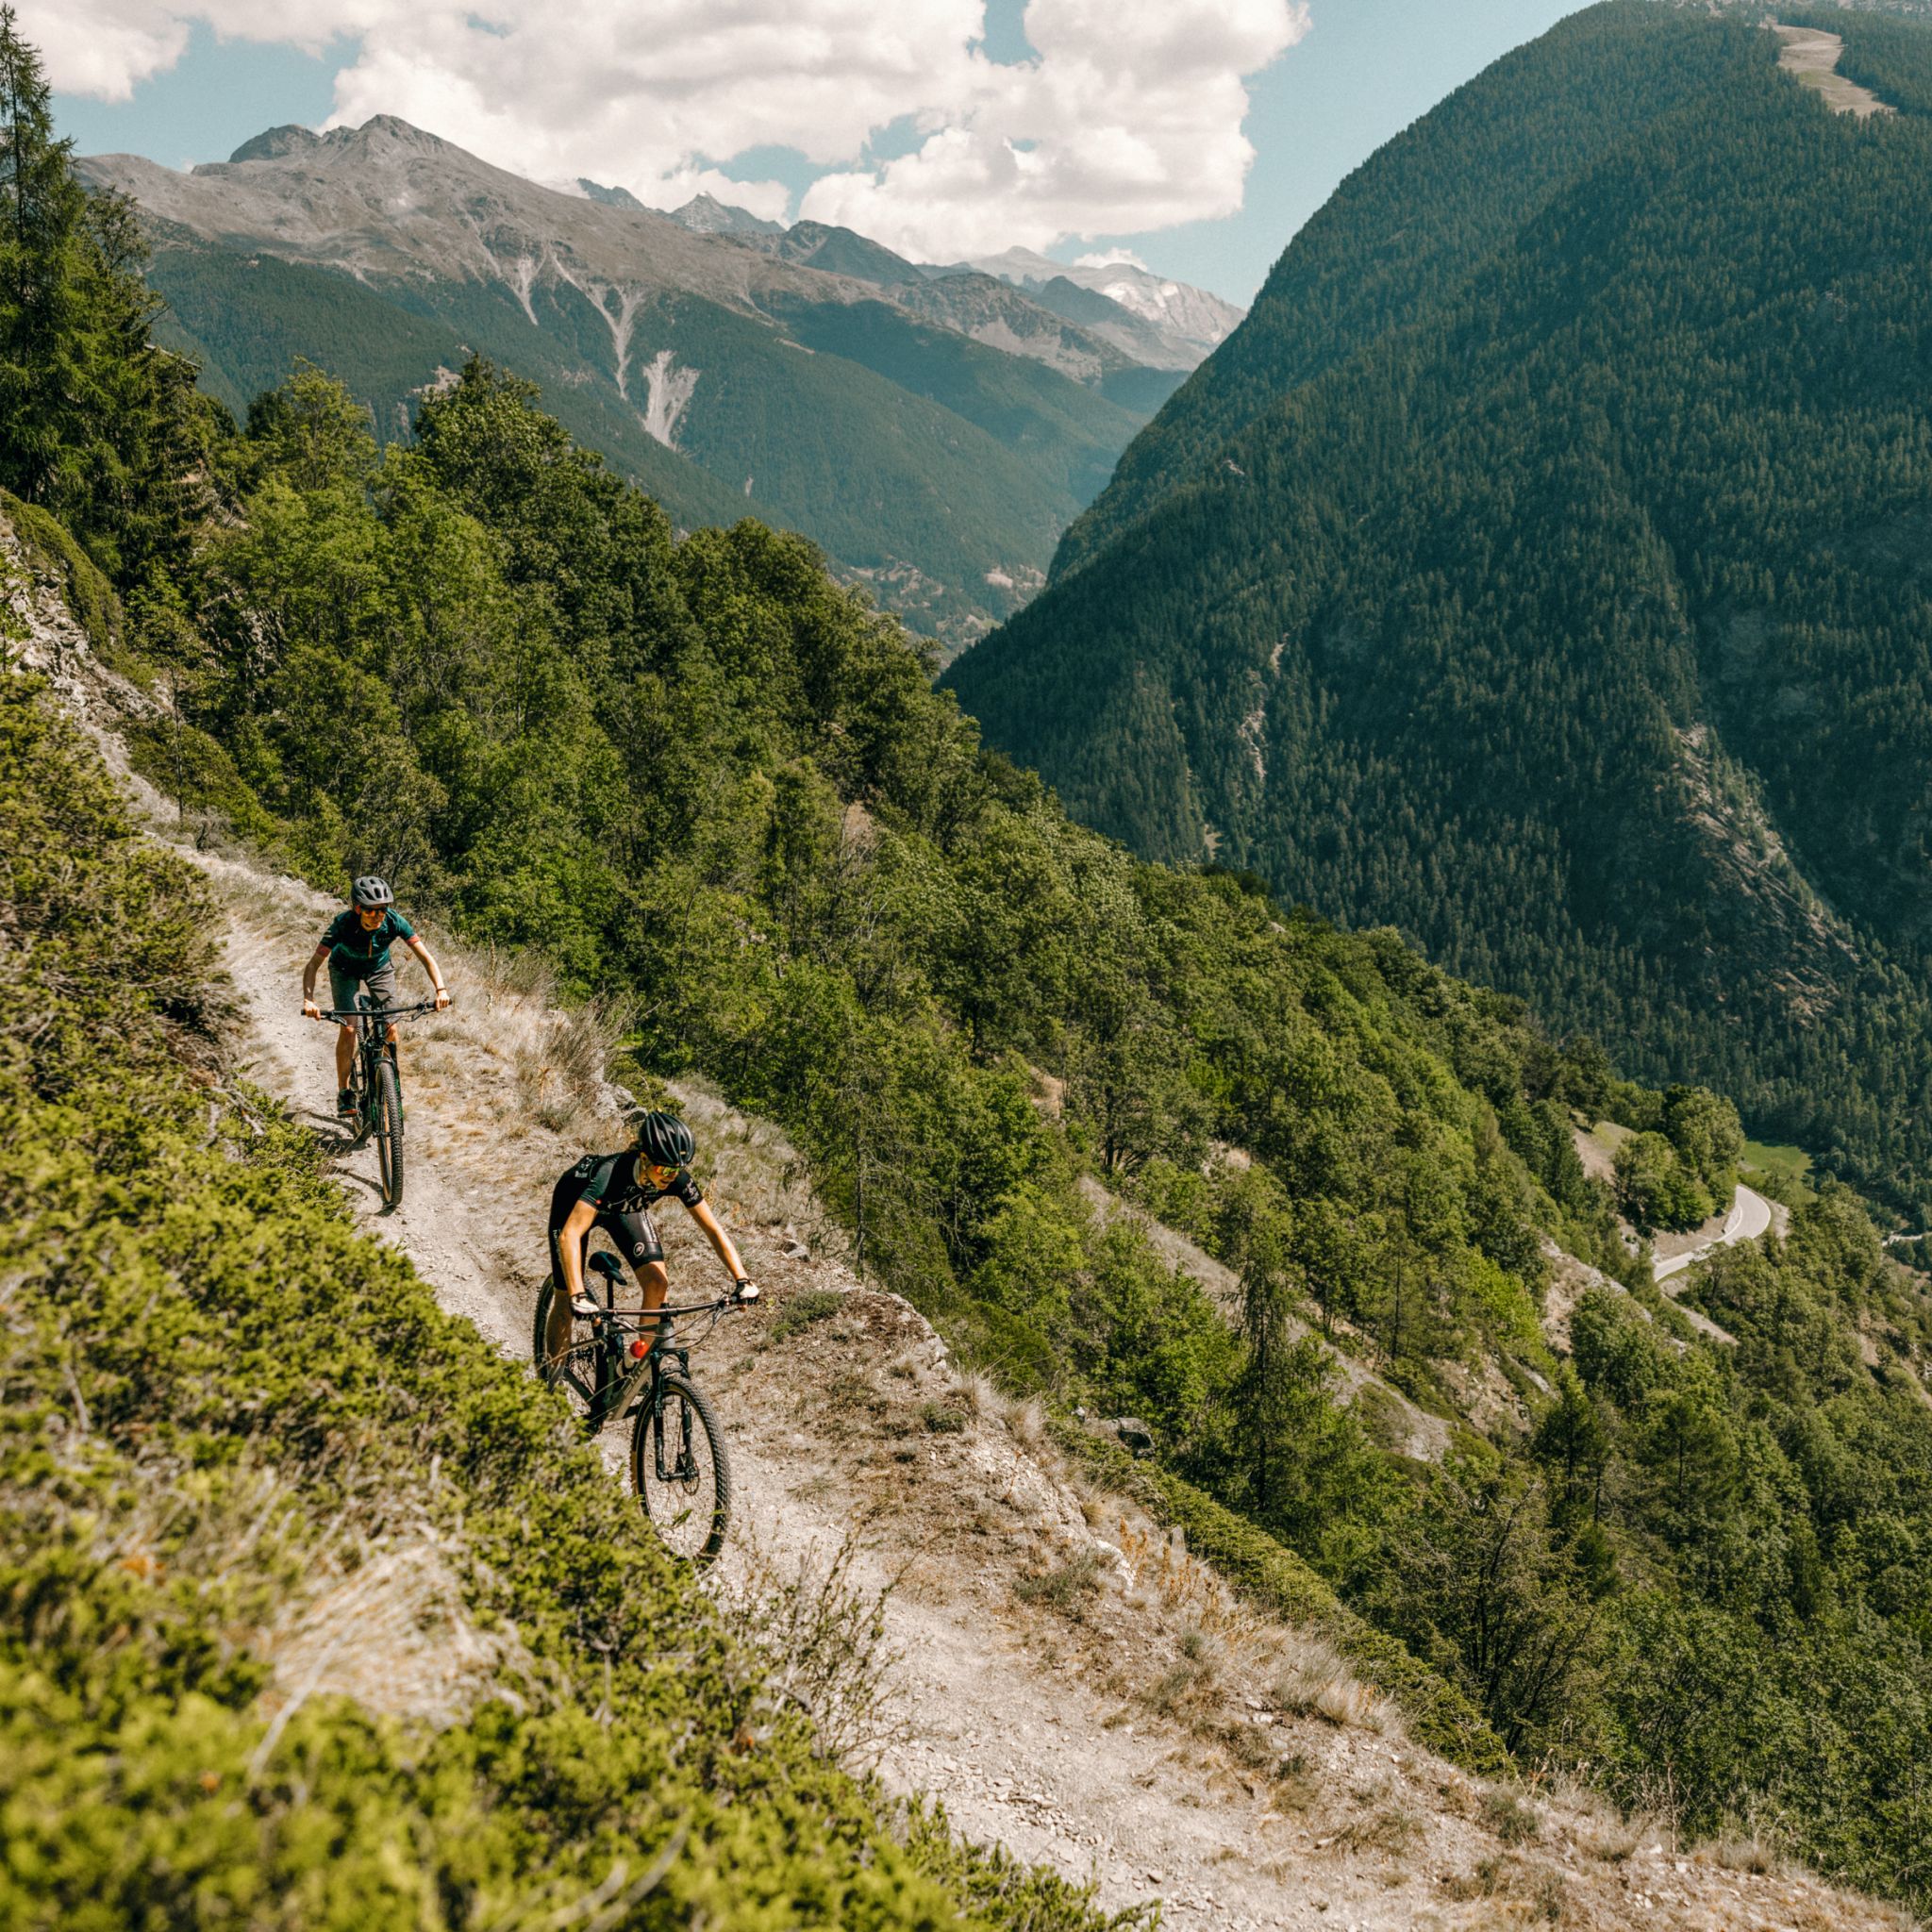 Two mountain bikers in full effort descending a mountain bike trail.  Valais, Switzerland.